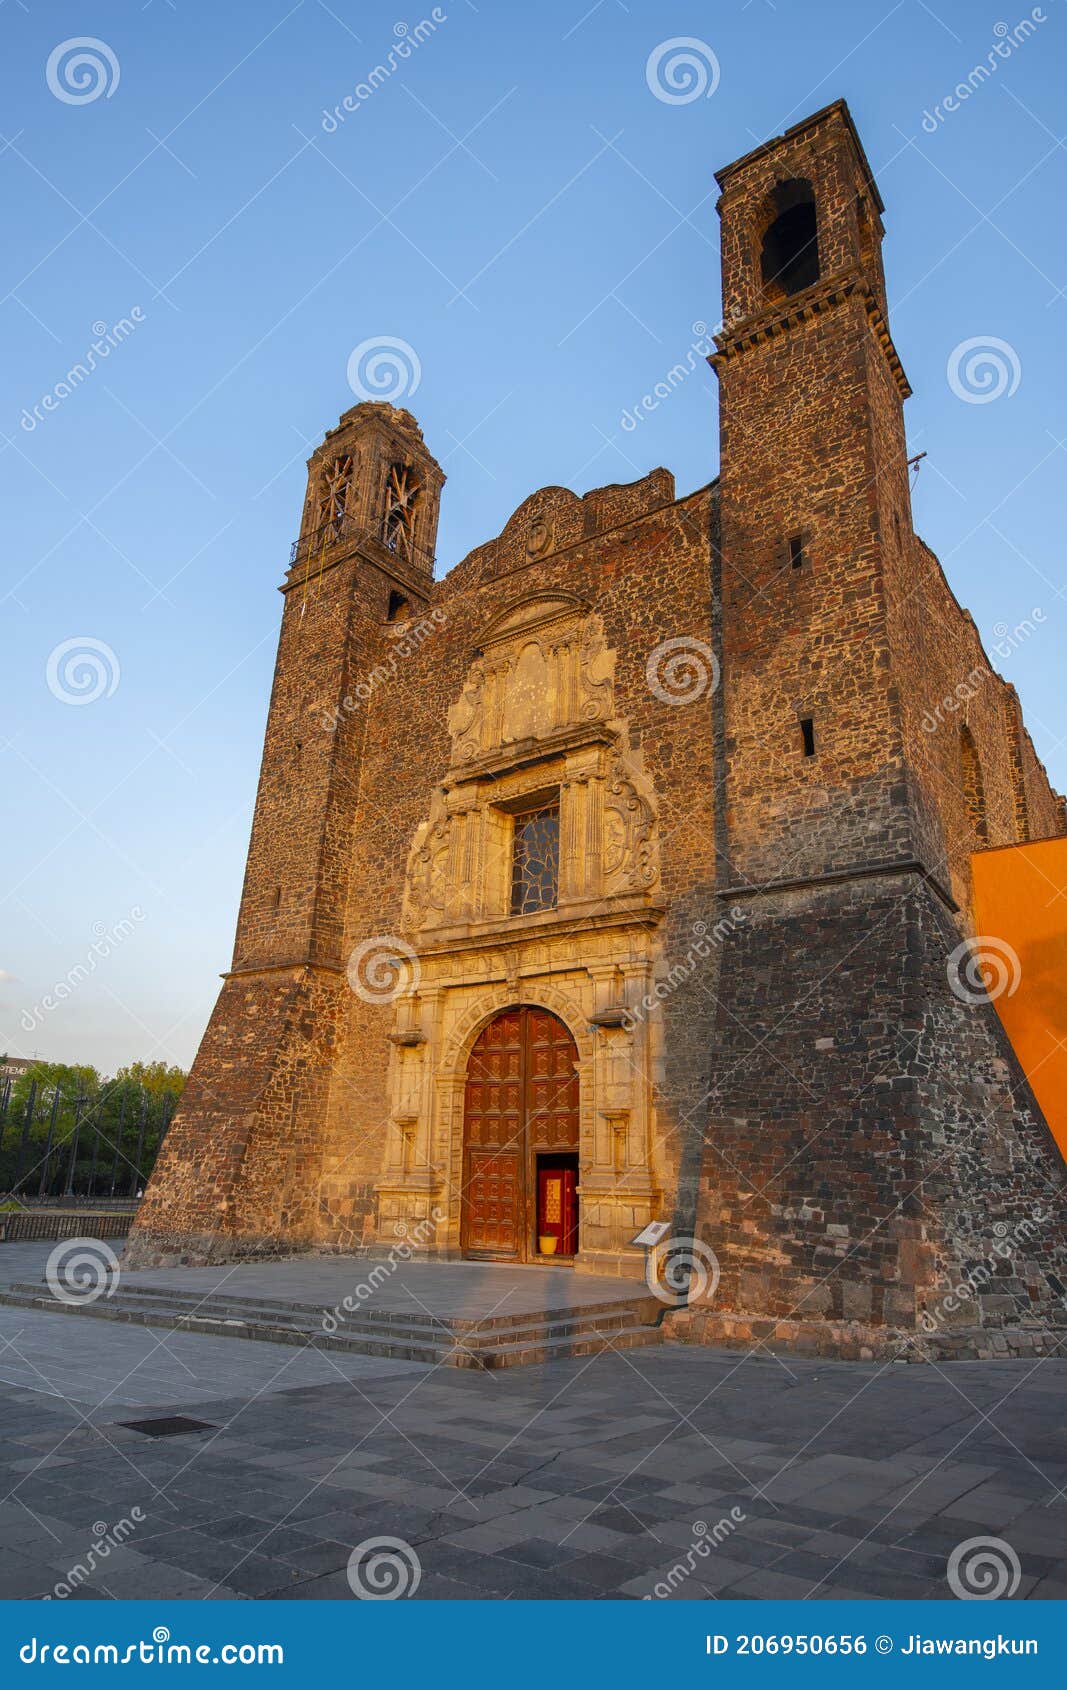 templo de santiago in mexico city, mexico